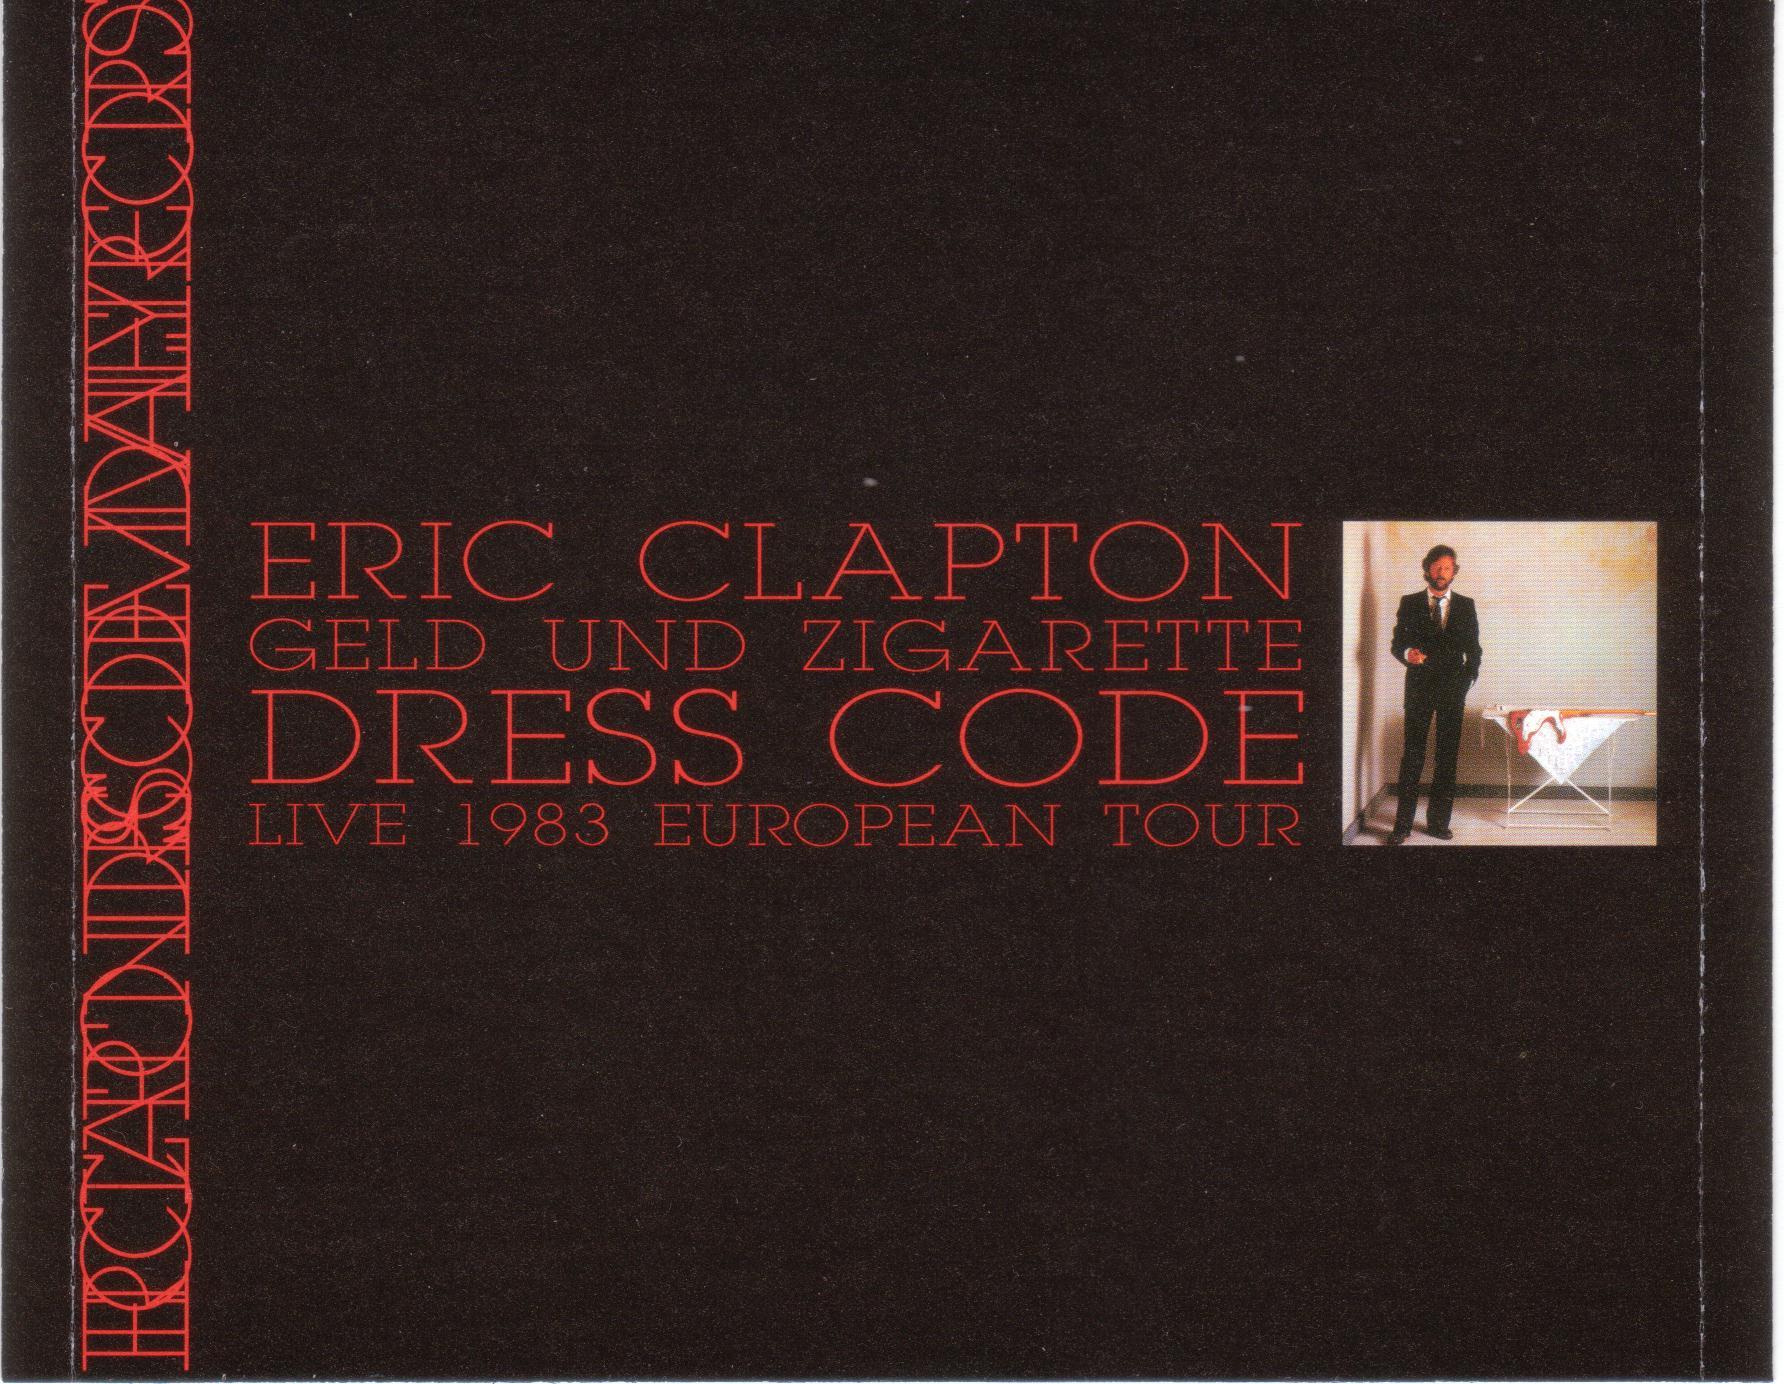 Eric Clapton - Dress Code - Bremen, Germany - April 20, 1983 - Mid 